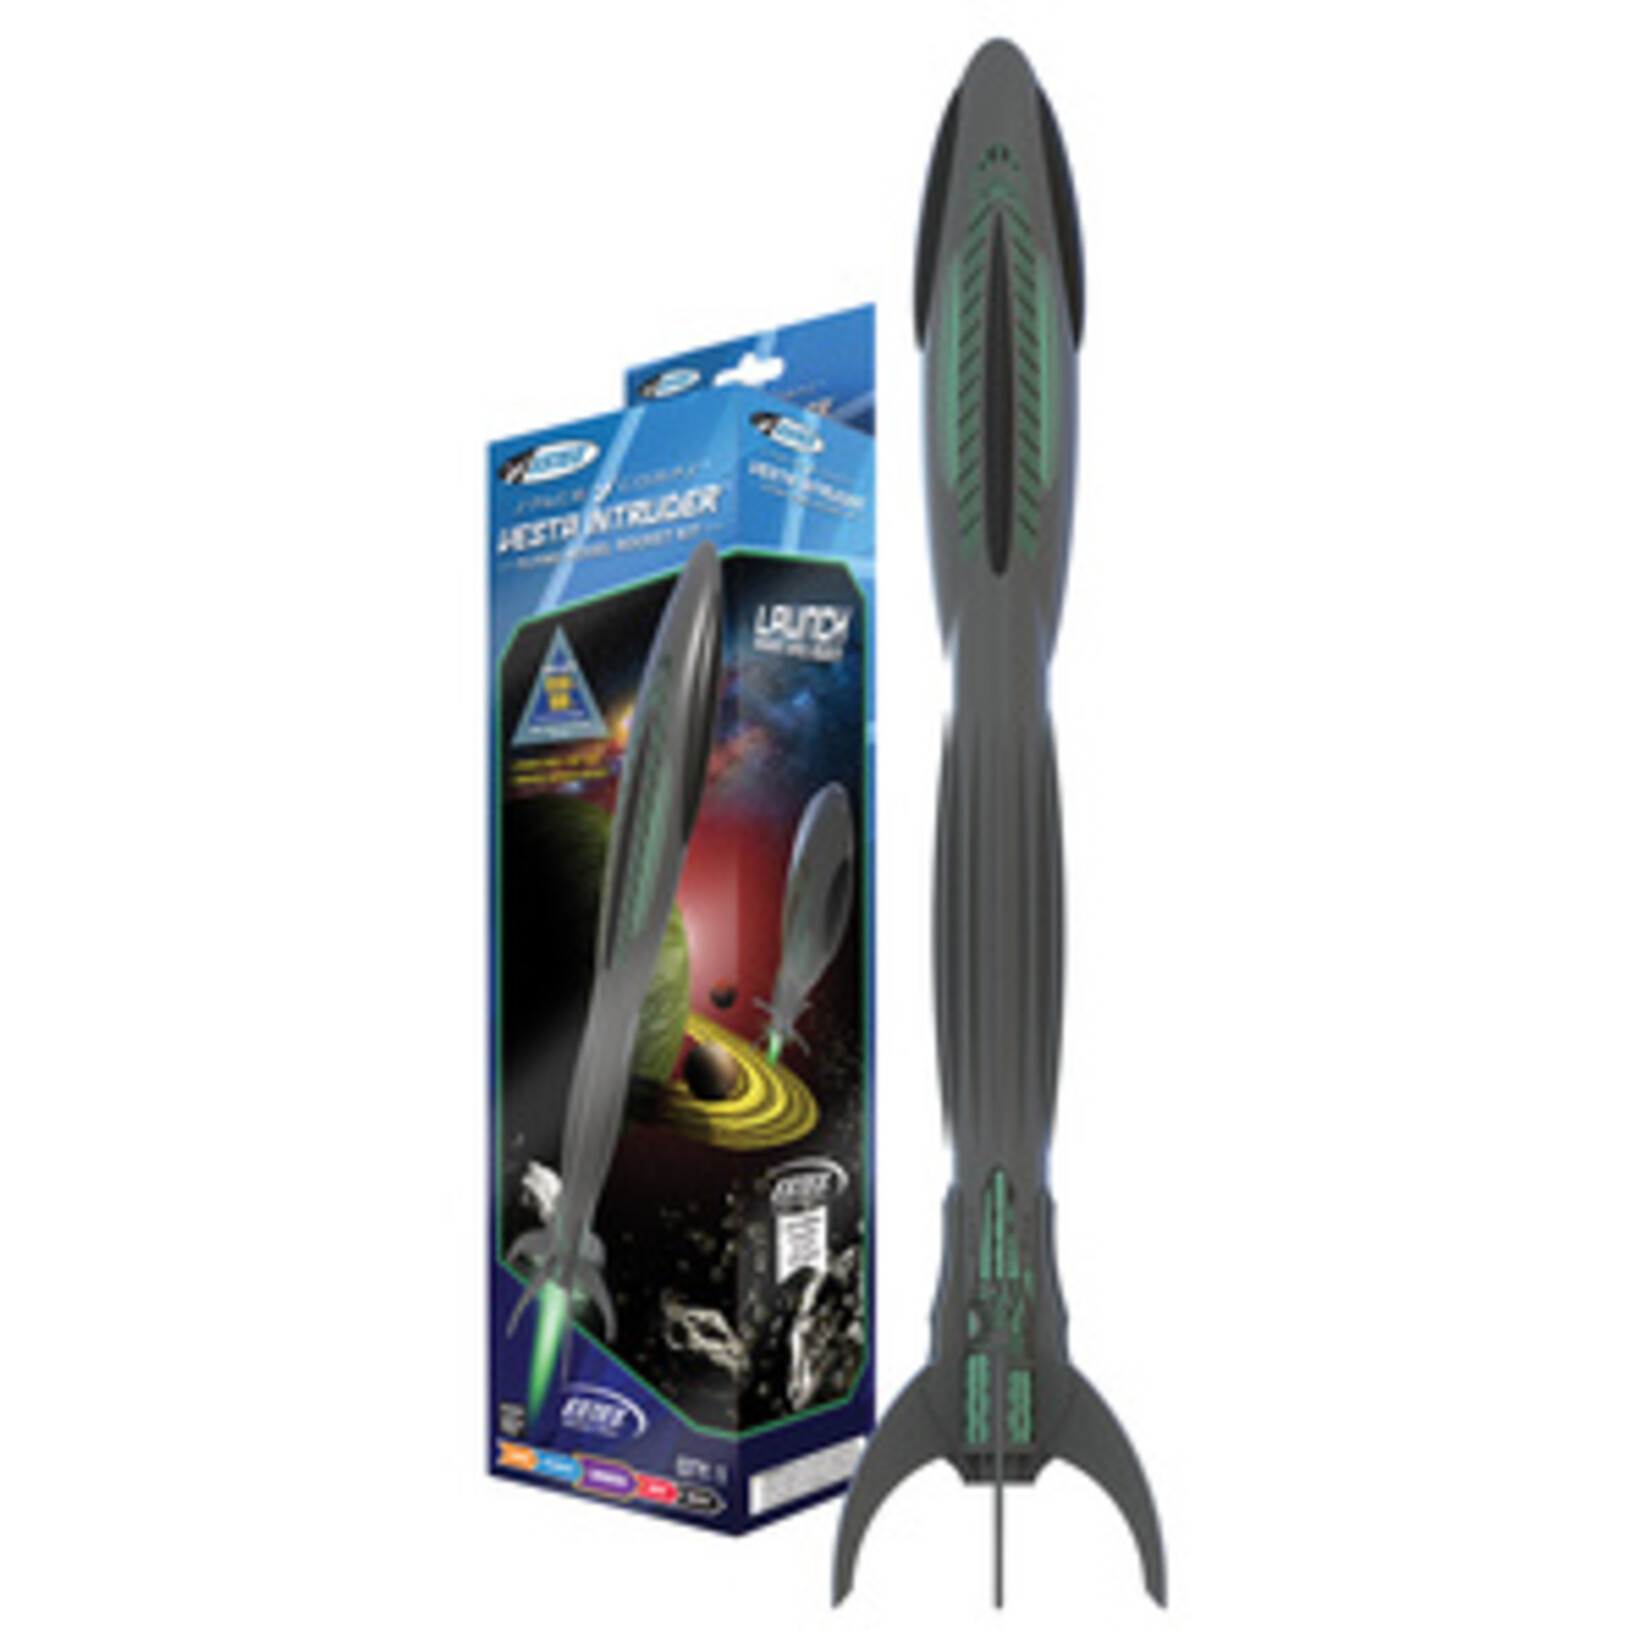 Estes Rockets EST7312  Space Corps Vesta Intruder, Rocket Kit, Advanced